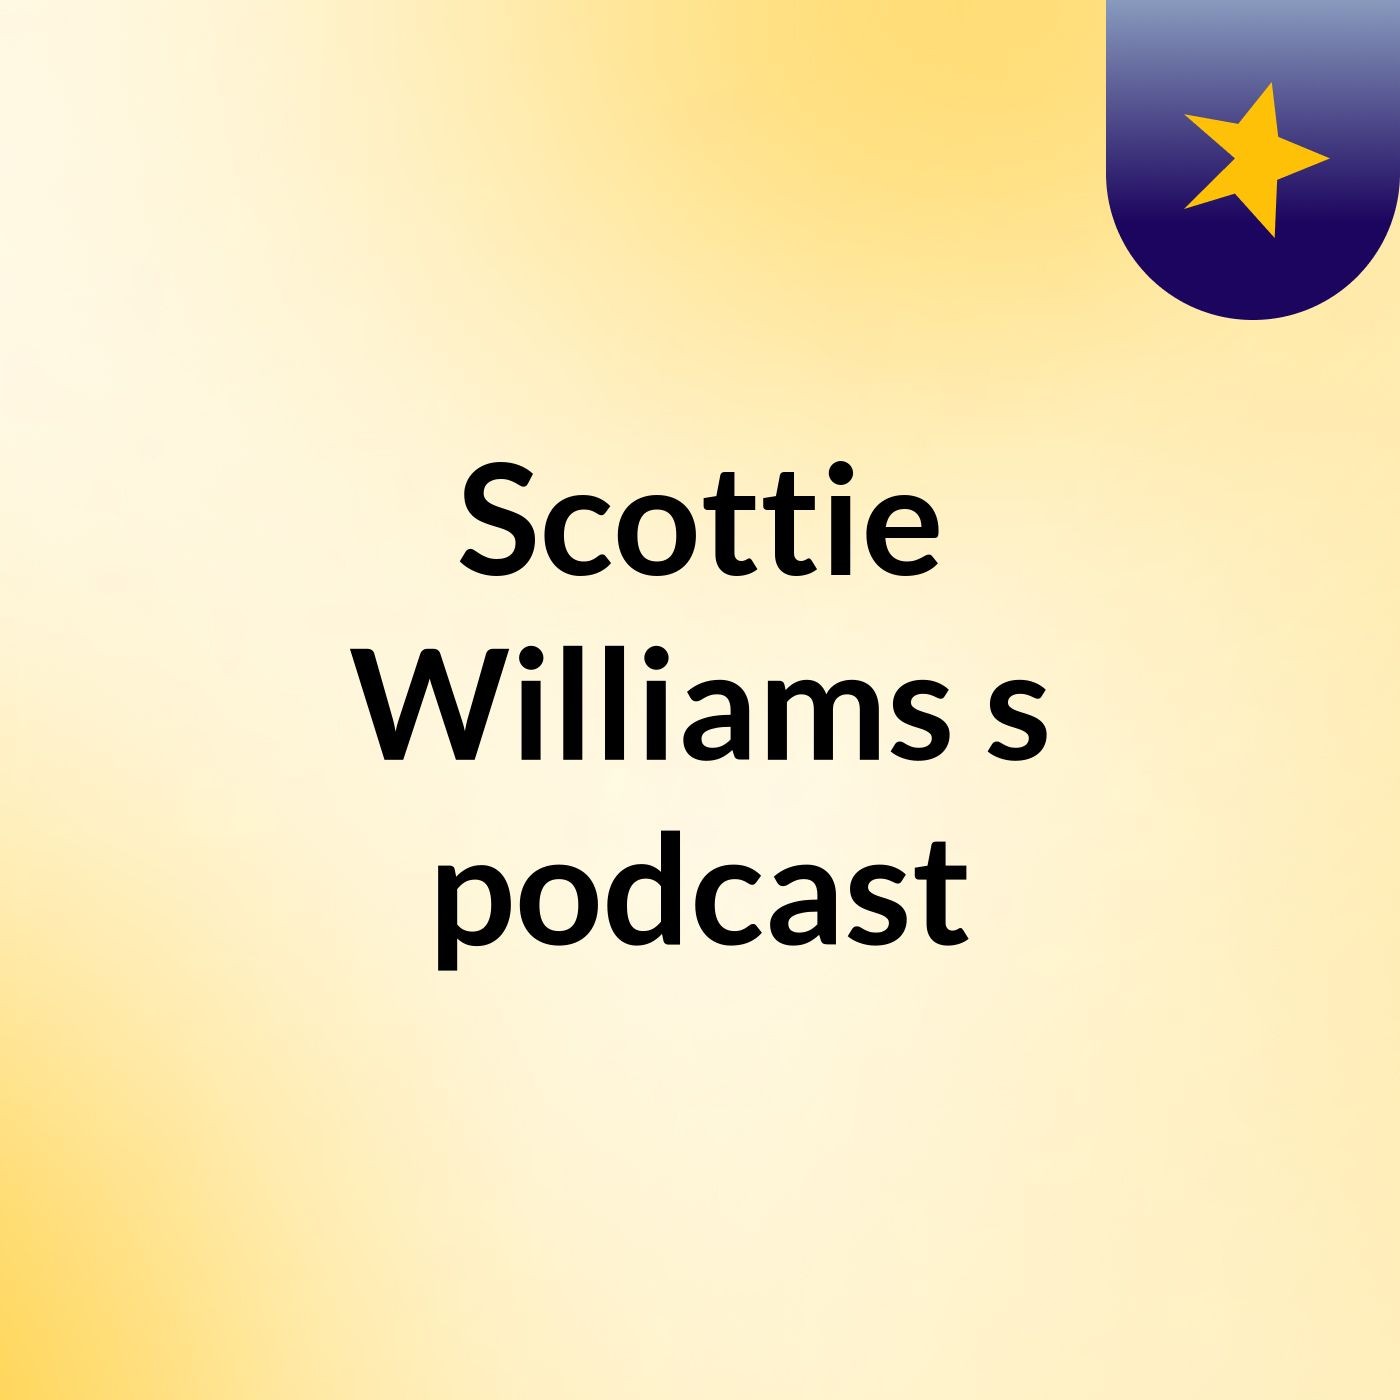 Episode 2 - Scottie Williams's podcast